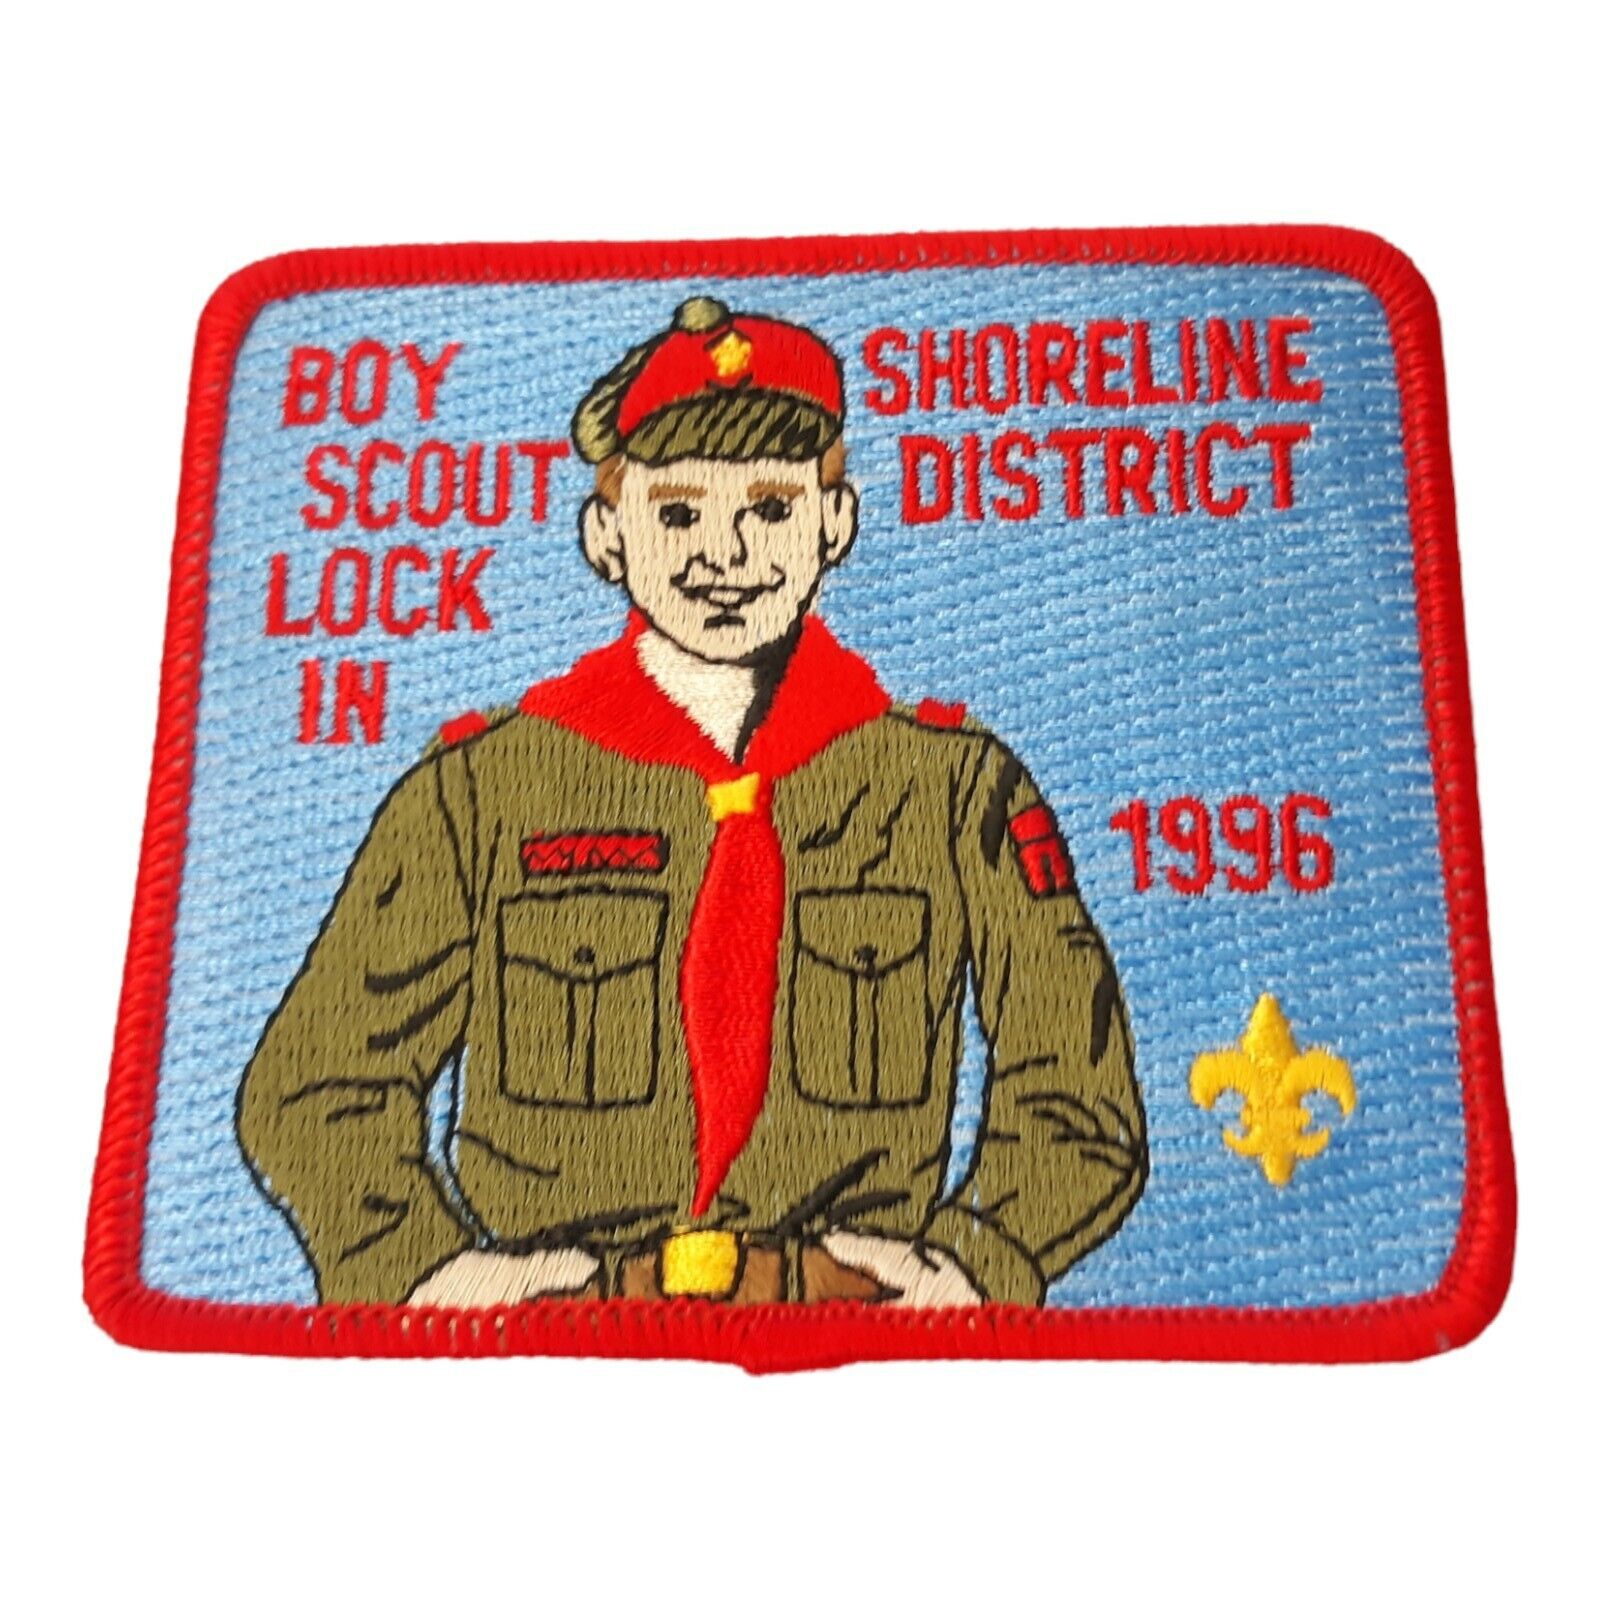 1996 Boy Scout Lock In Shoreline District 3.75\